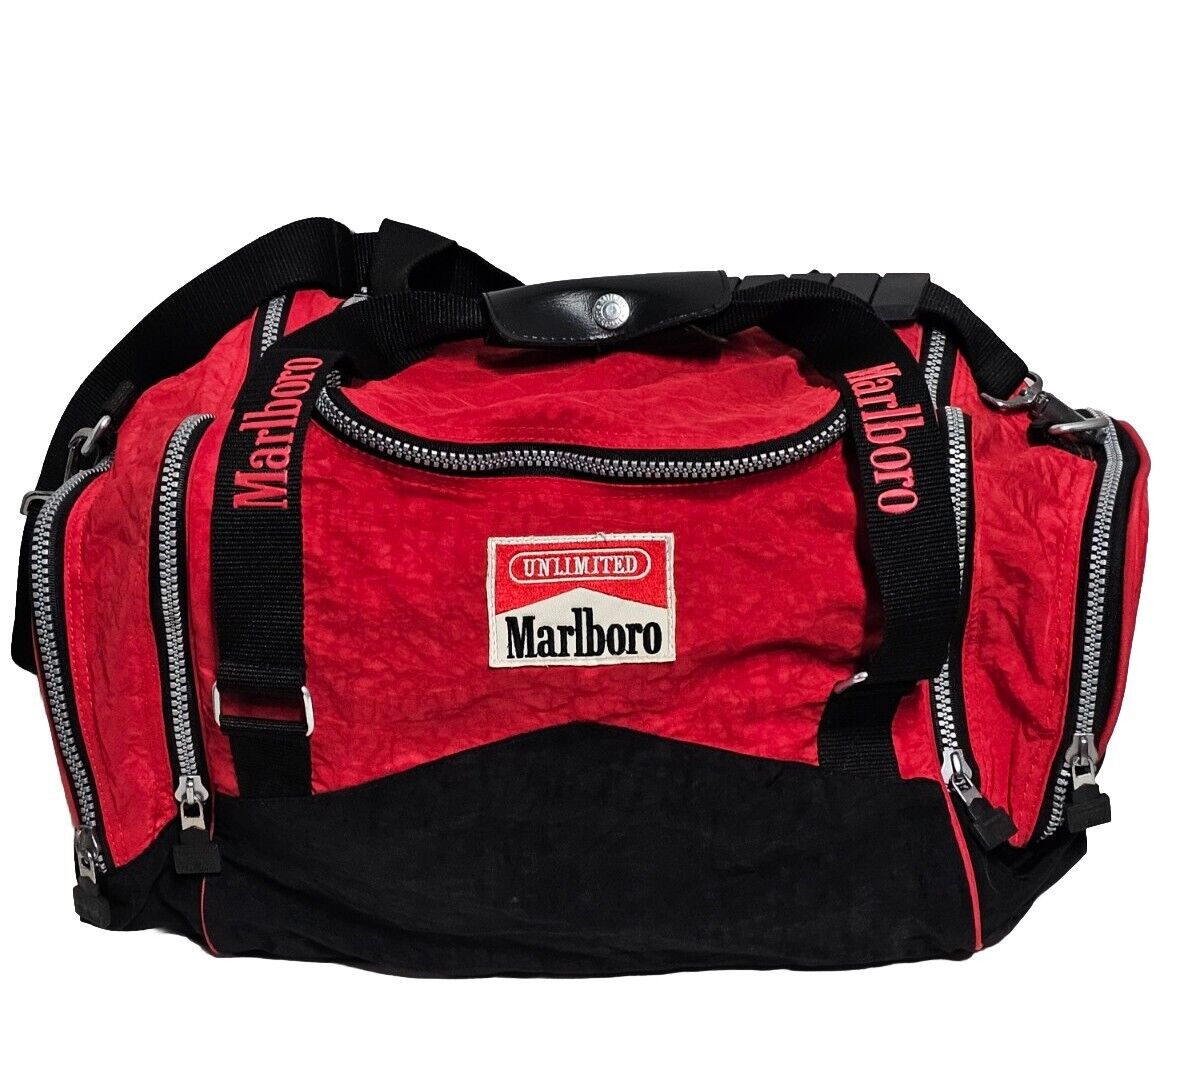 VINTAGE 1990's Marlboro Unlimited Logo Duffle Gym Bag with Shoulder Strap